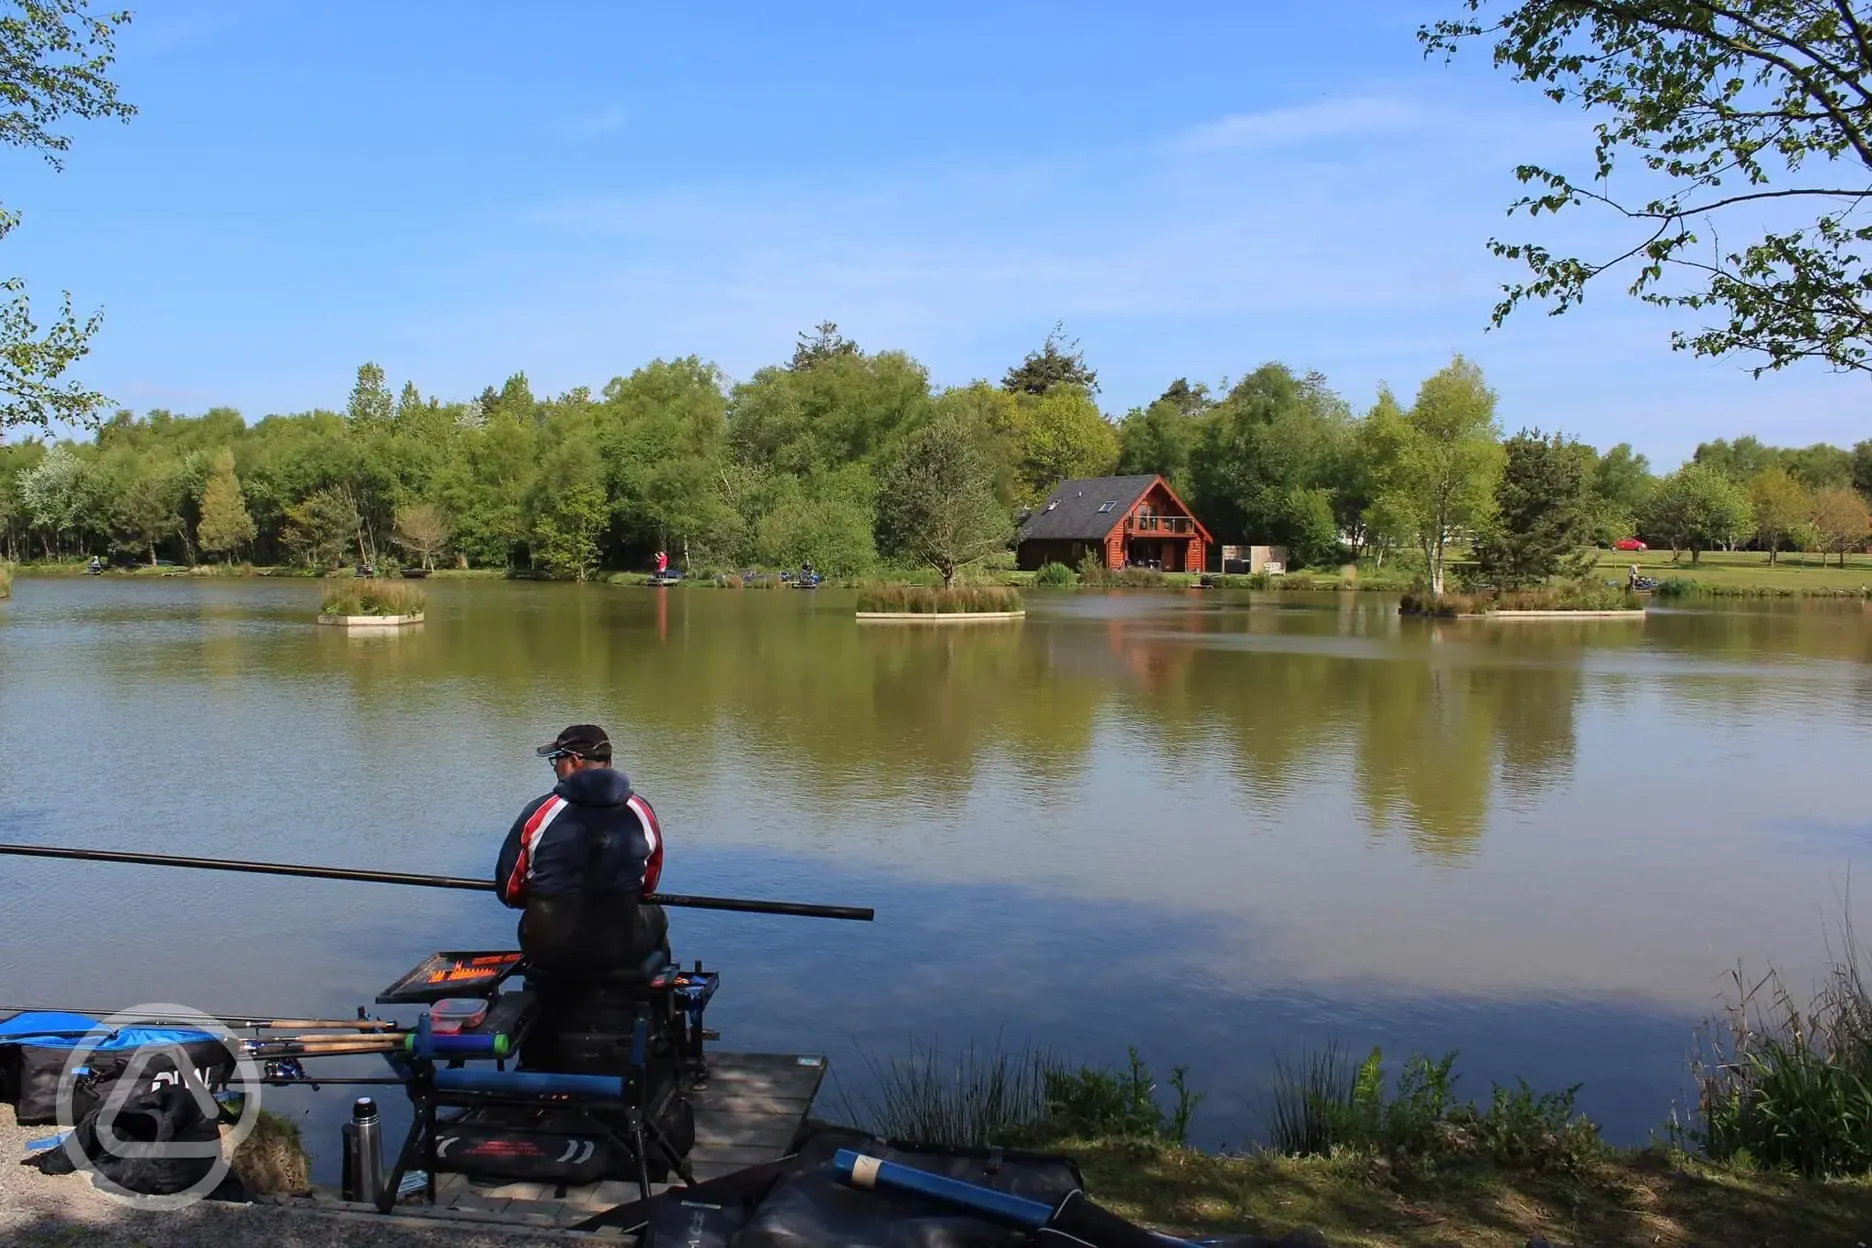 Pleasure fishing on Tanners lake